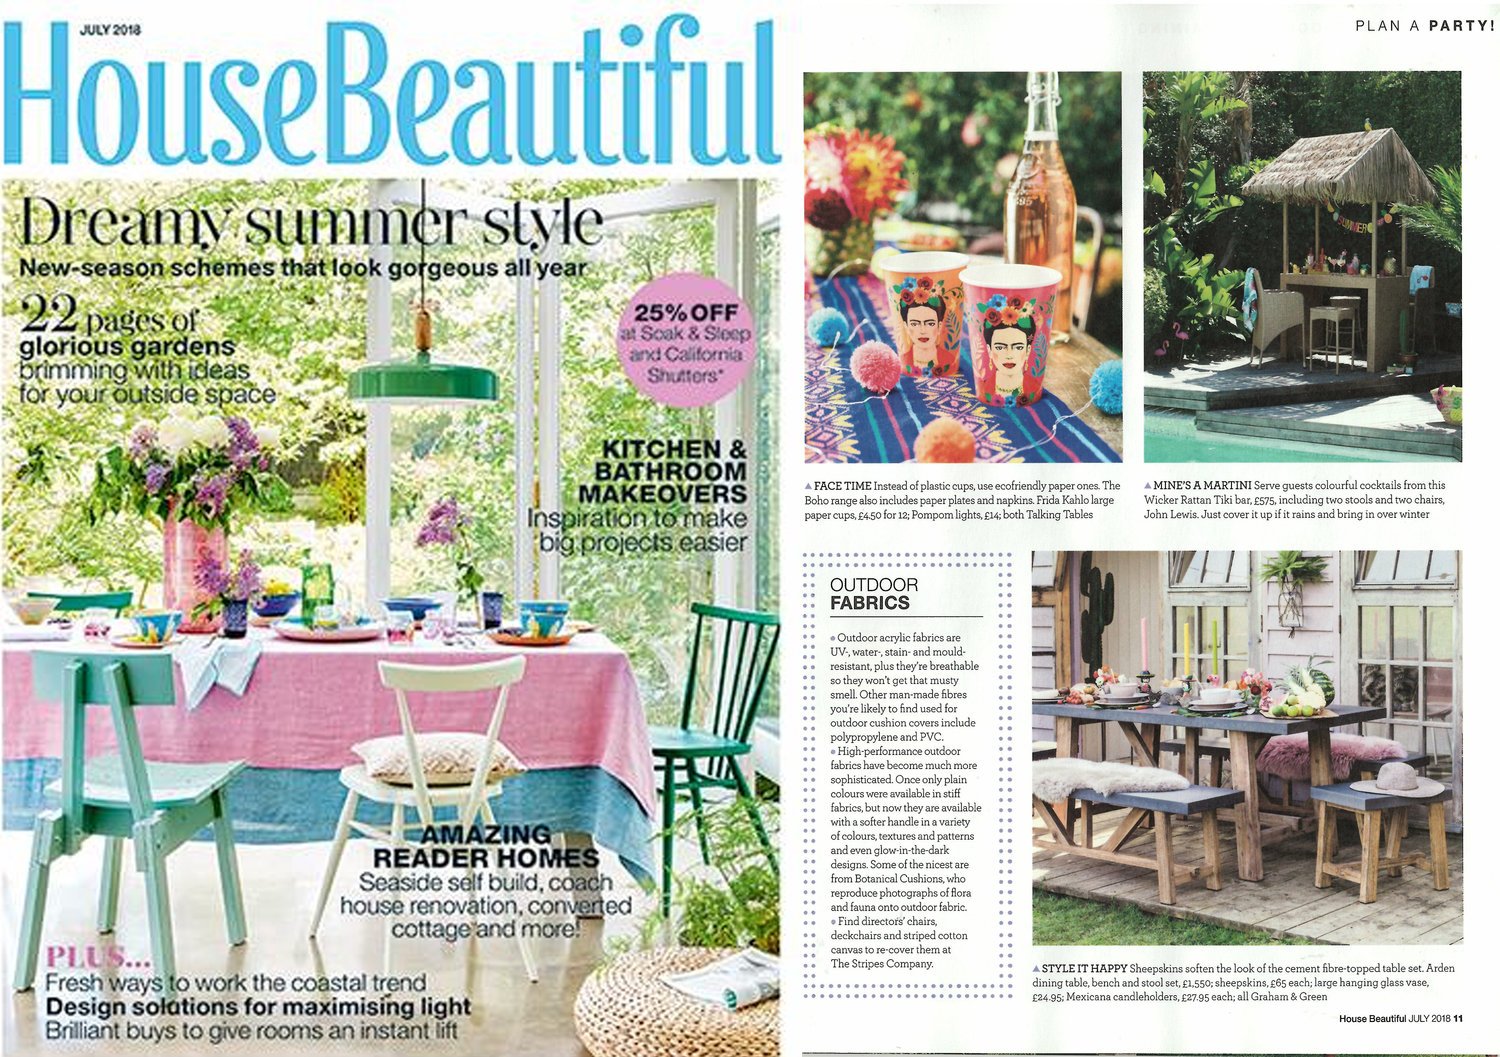 House+Beautiful+Supplement,+July,+pg.+11,+Tiki+bar+poolside+lifestyle+image.+(1).jpg